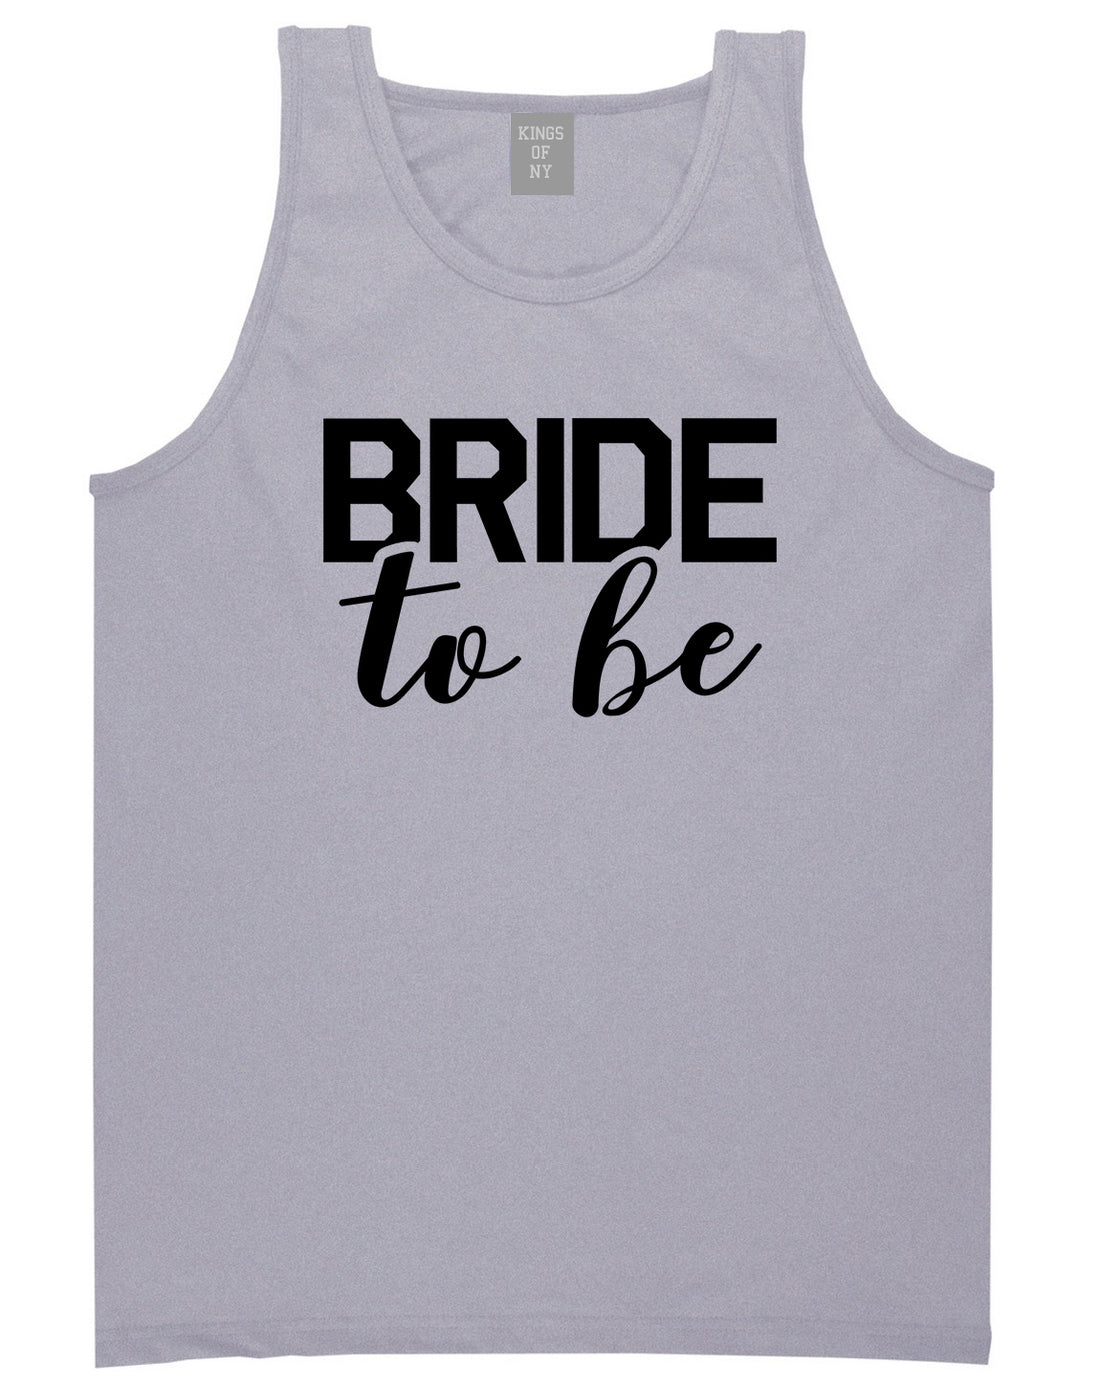 Bride To Be Grey Tank Top Shirt by Kings Of NY